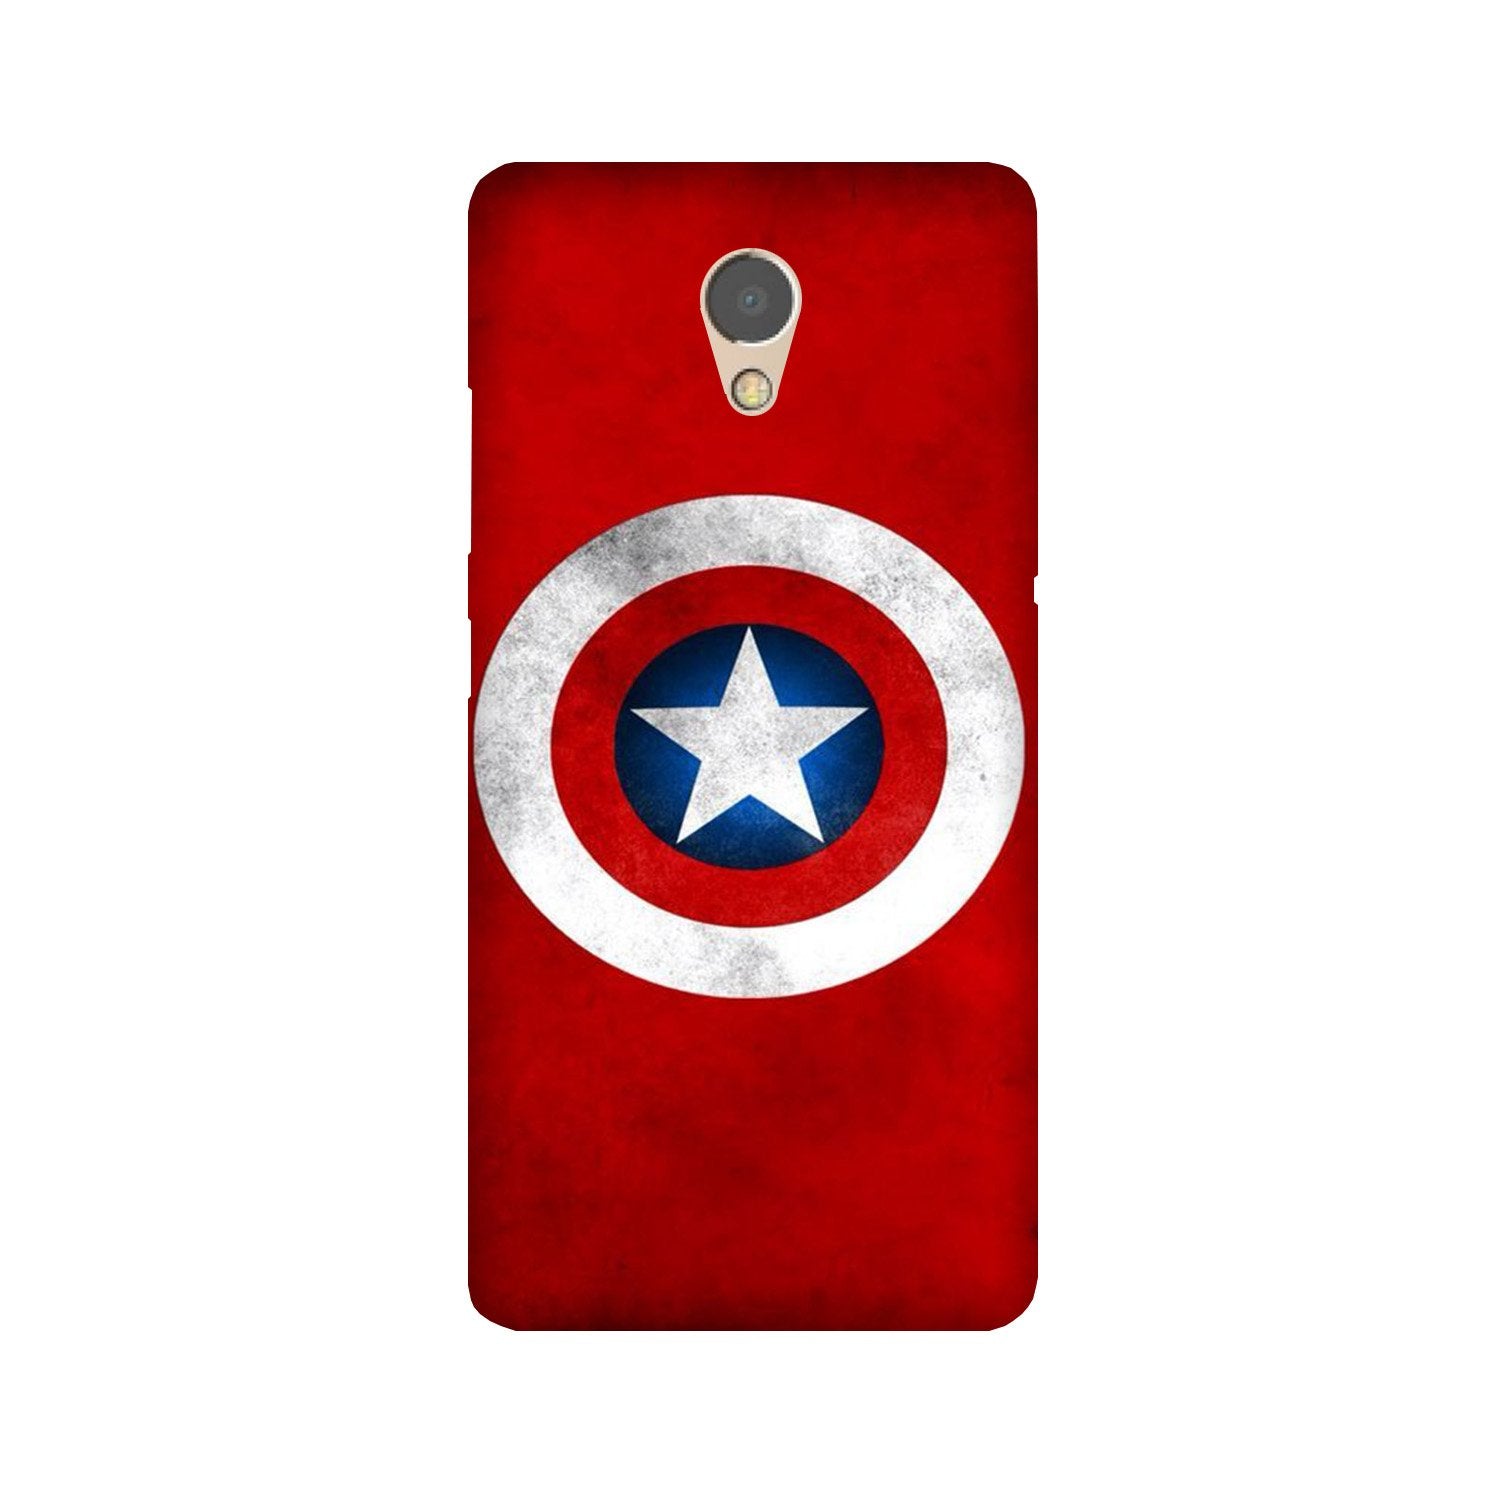 Captain America Case for Lenovo P2 (Design No. 249)